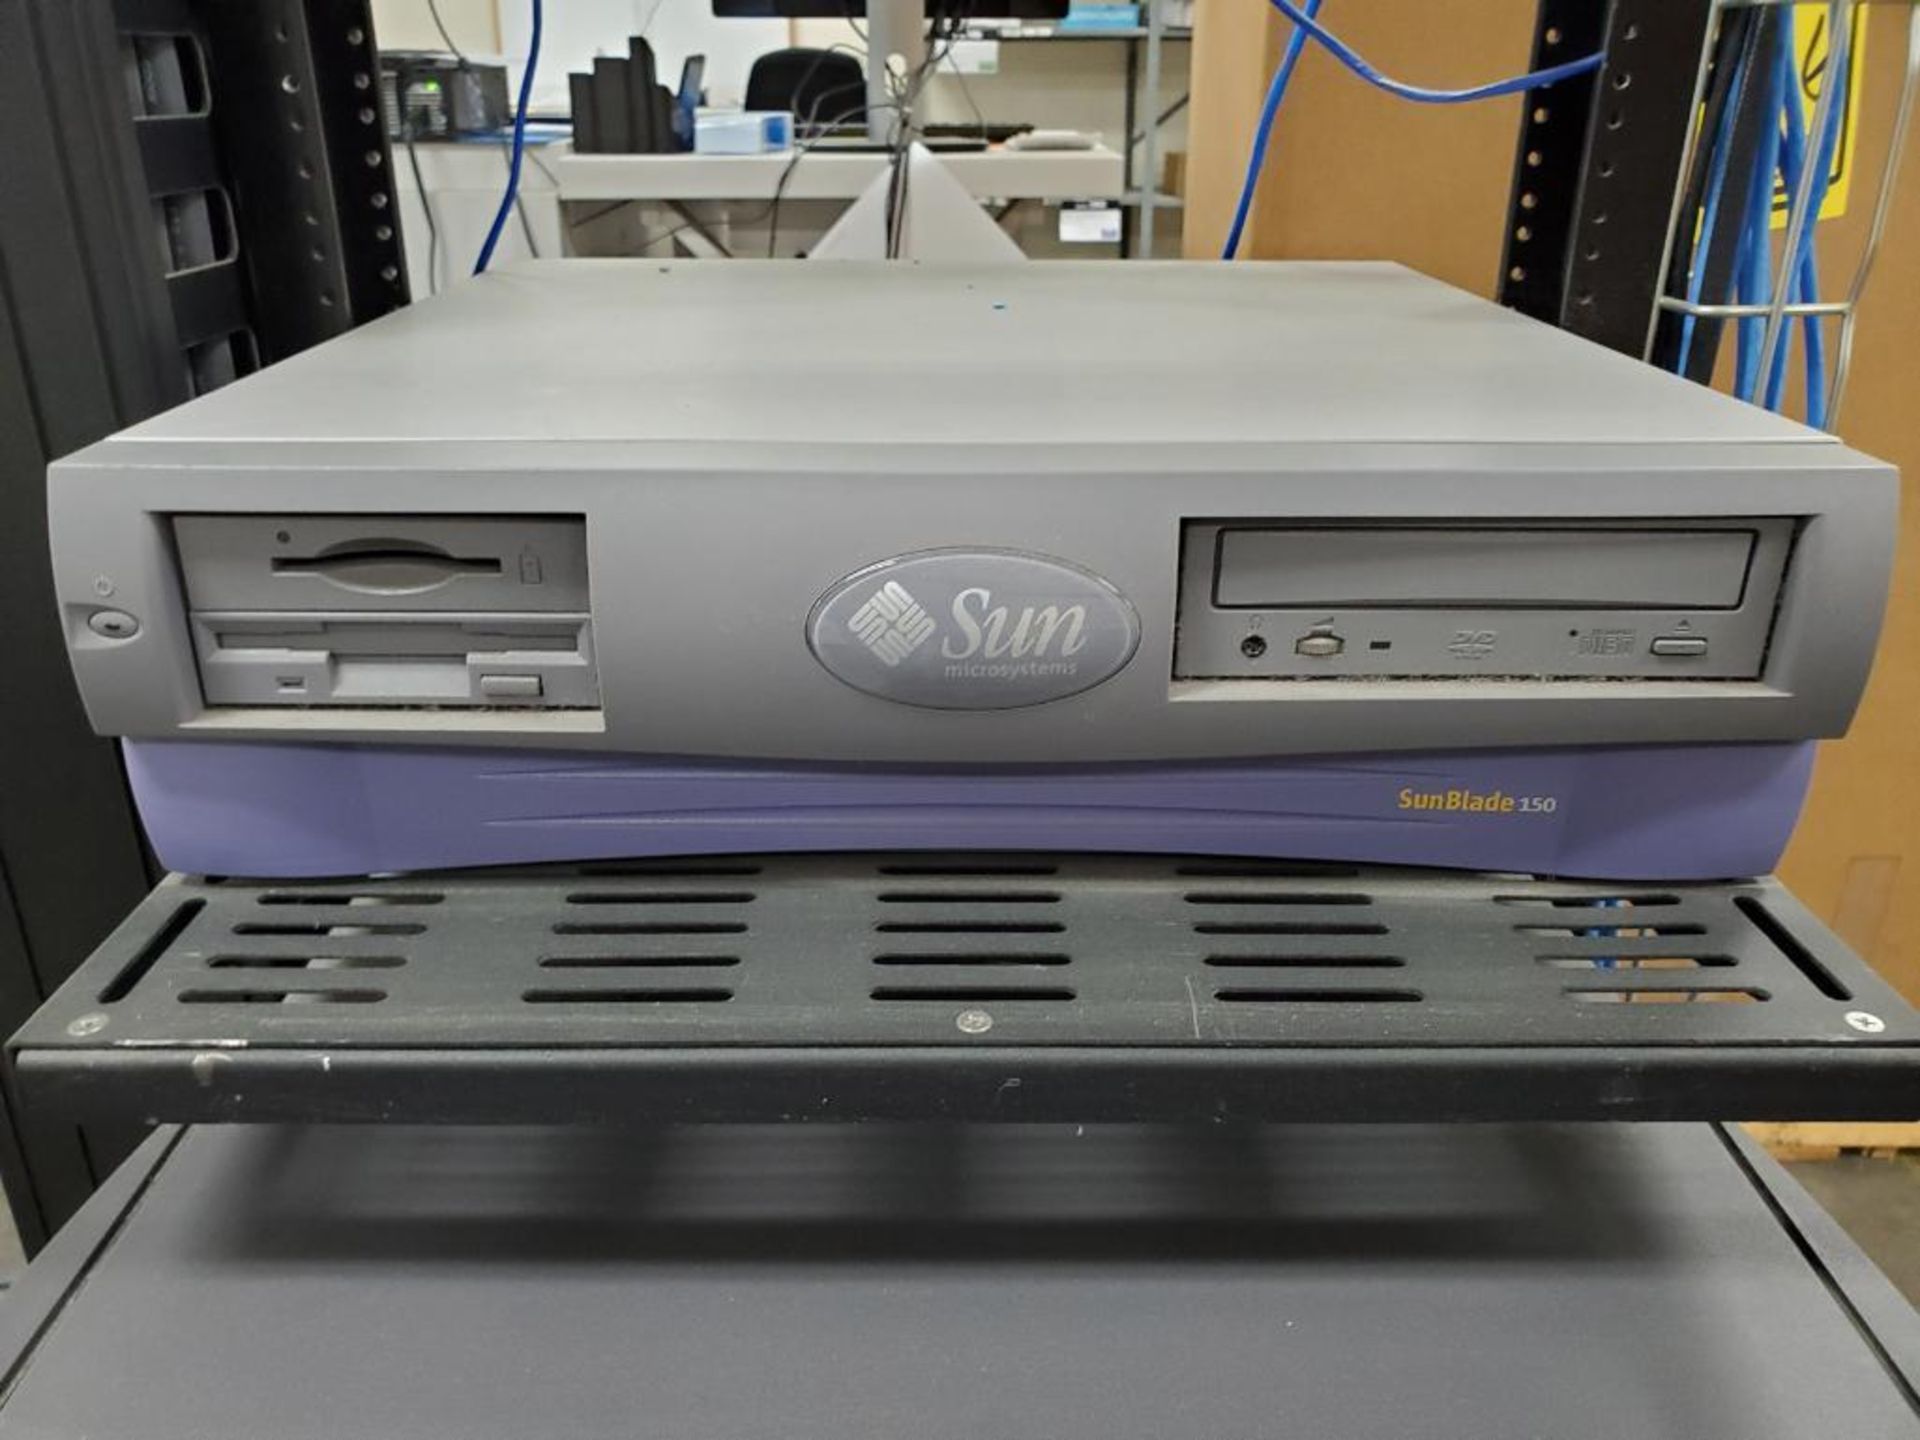 Sun Fire Microsystems V890 Printer Server w/ Sunblade 150 Cd/Disk Drive - Image 5 of 7